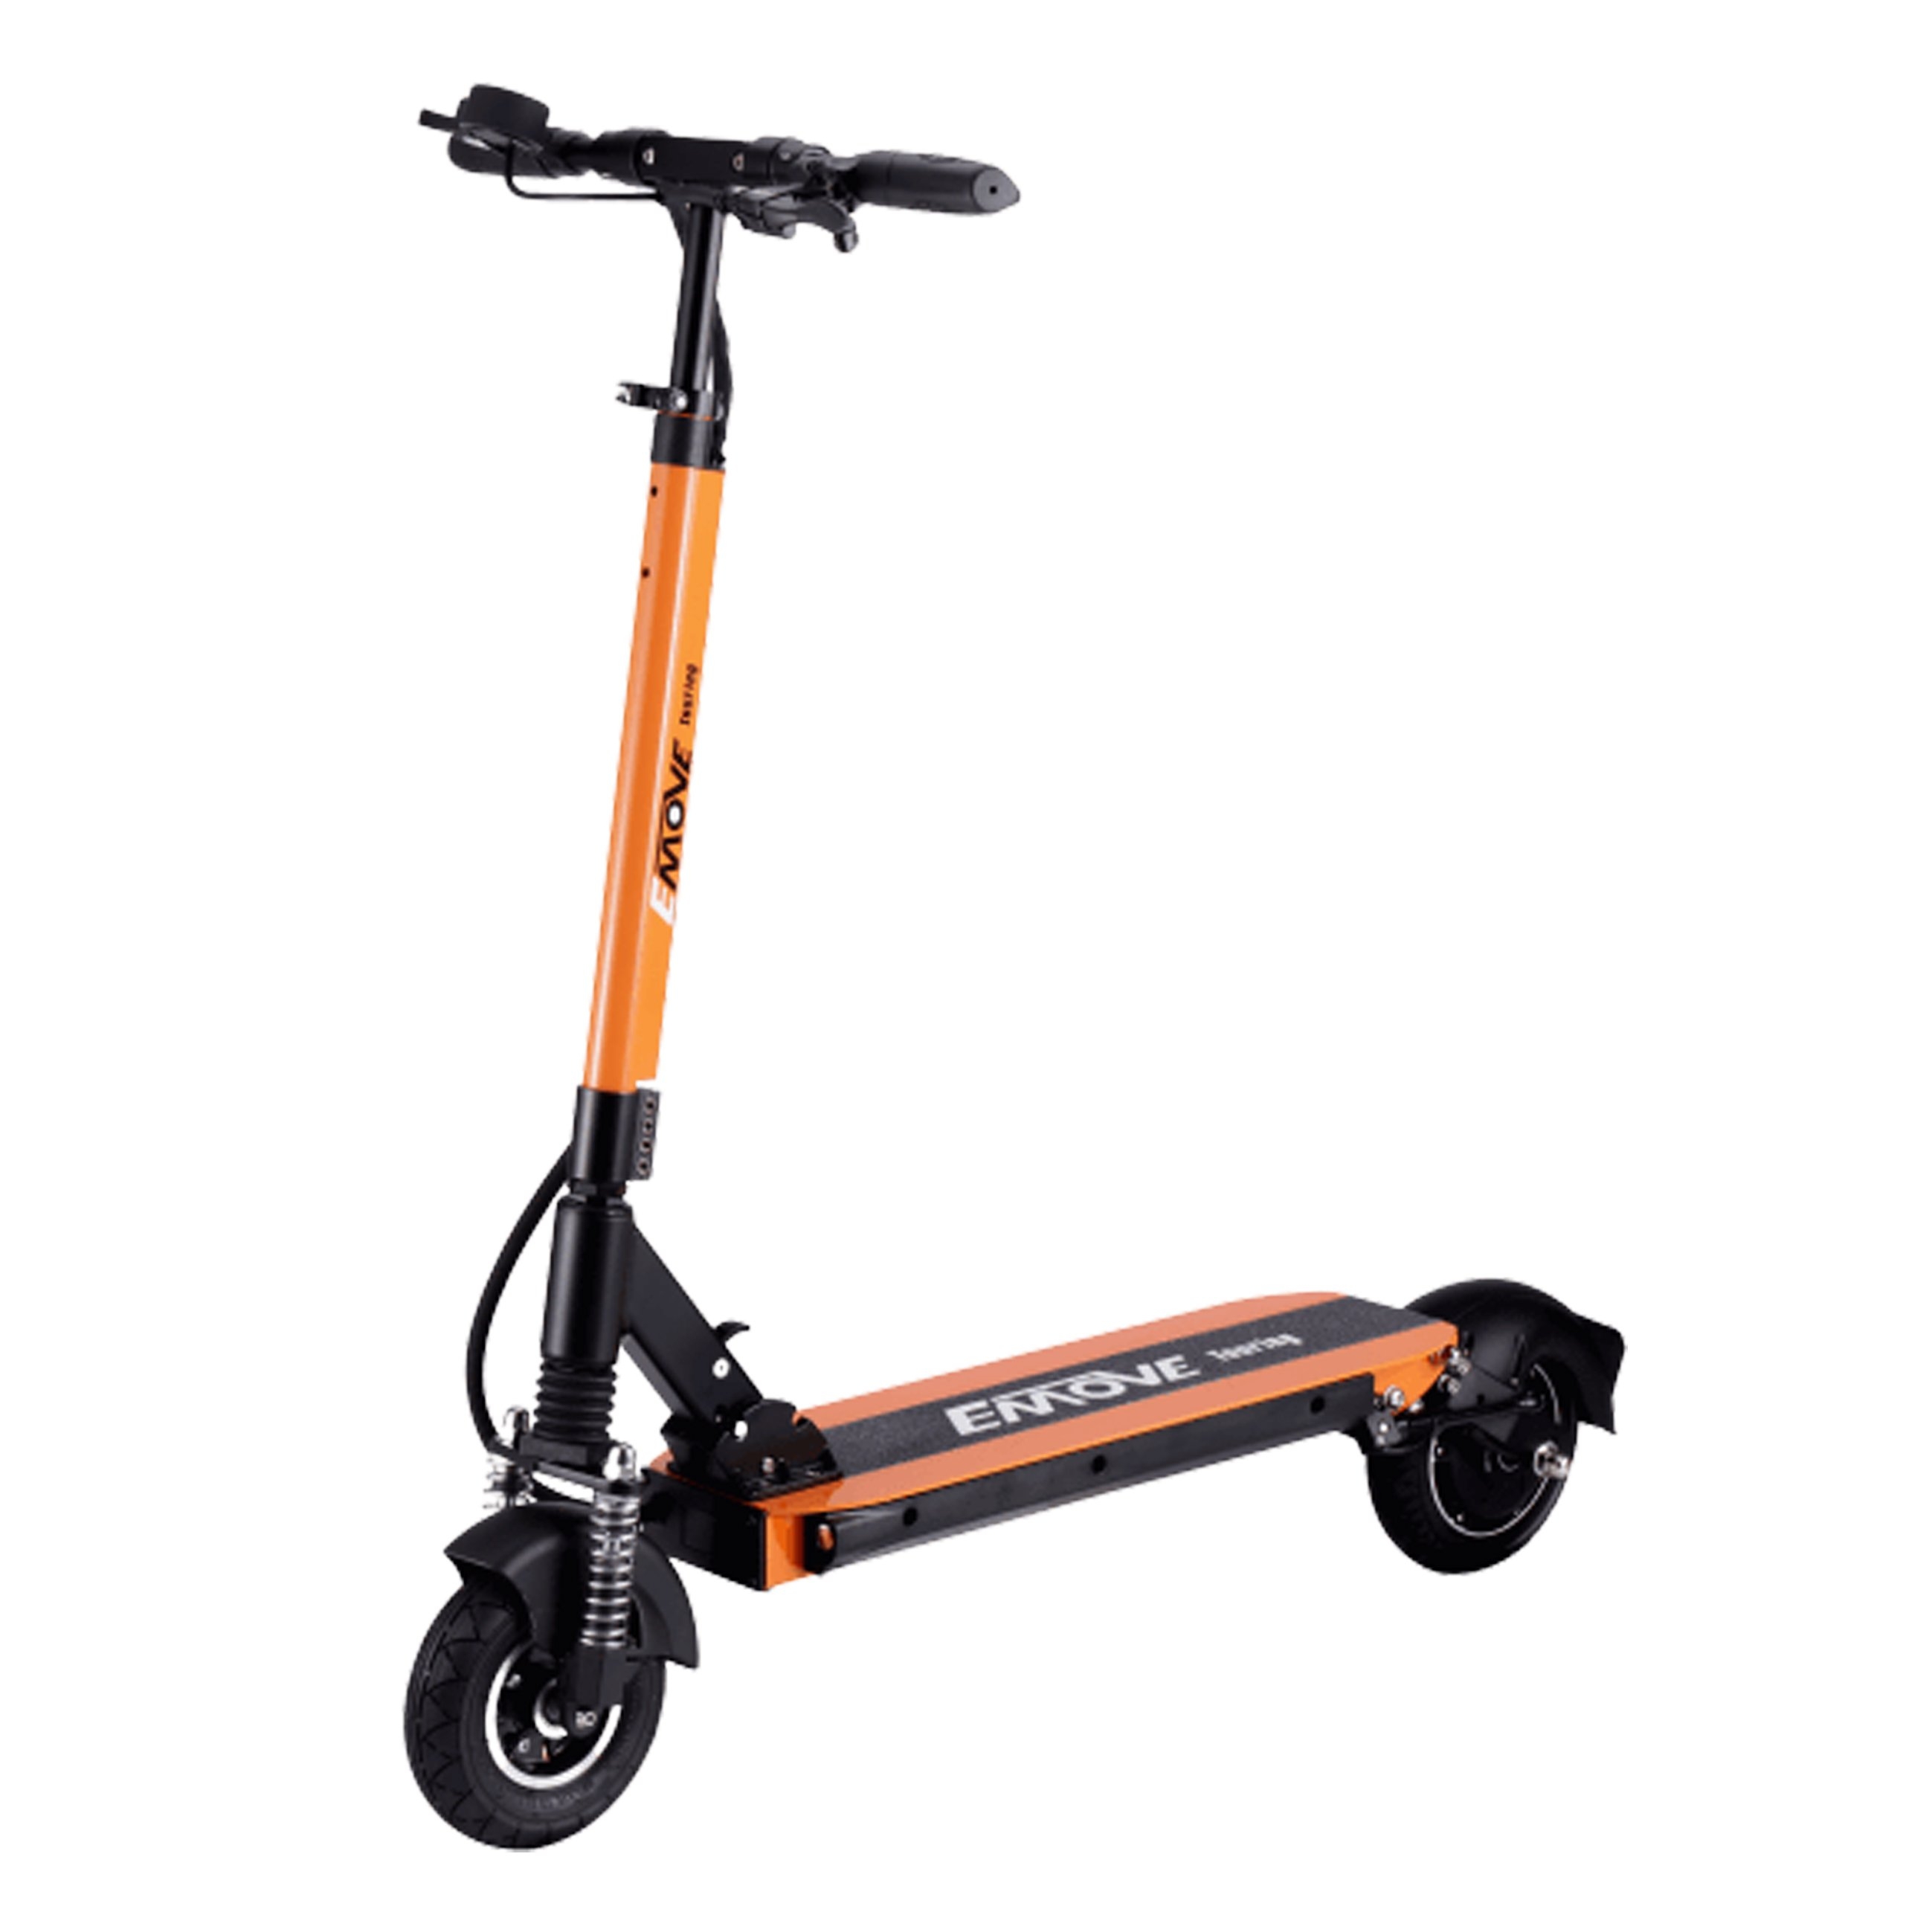 Emove Touring Electric Scooter – Orange